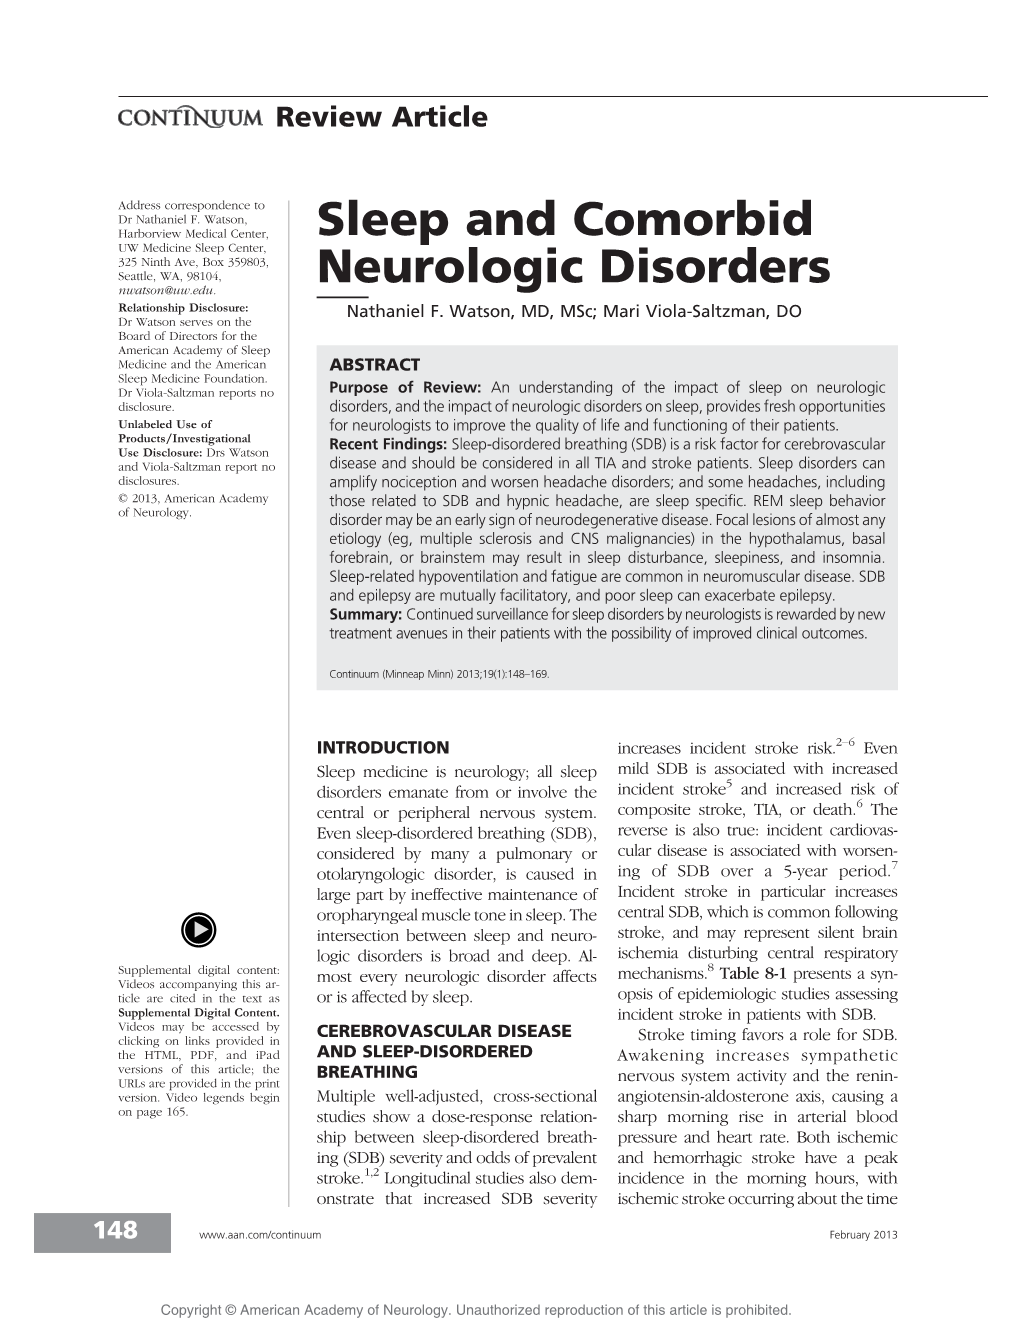 Sleep and Comorbid Neurologic Disorders